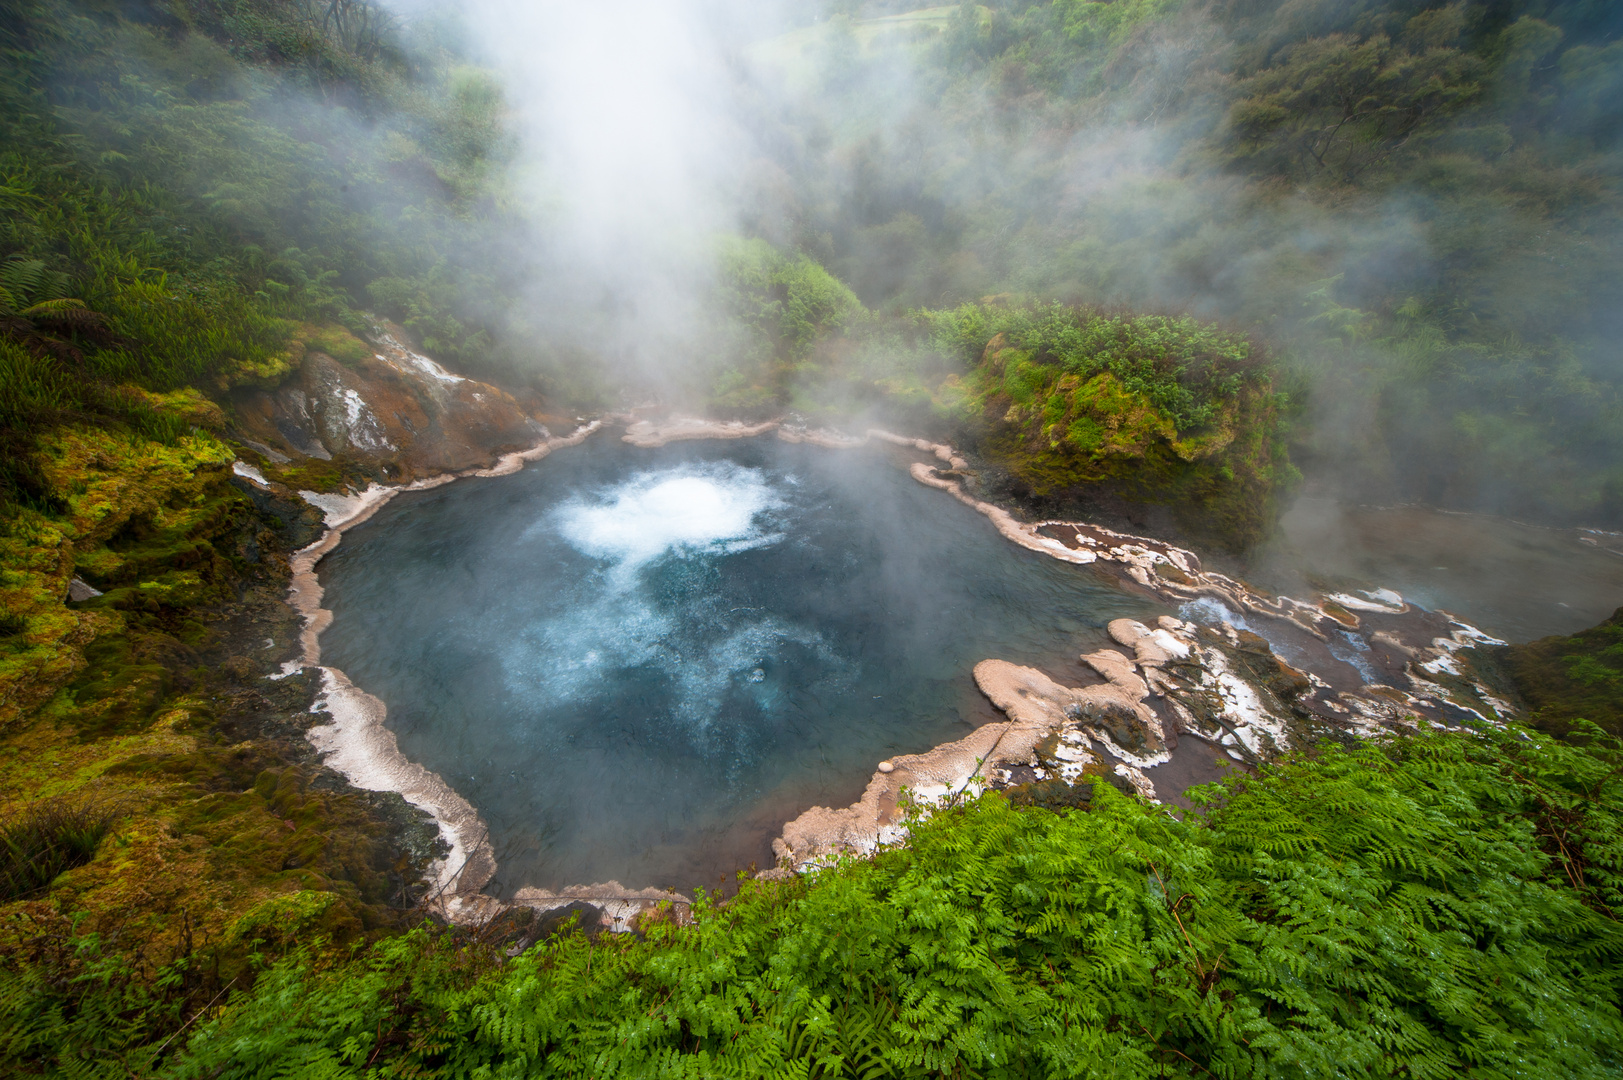  Neuseeland: Waikite Valley Thermal Pool